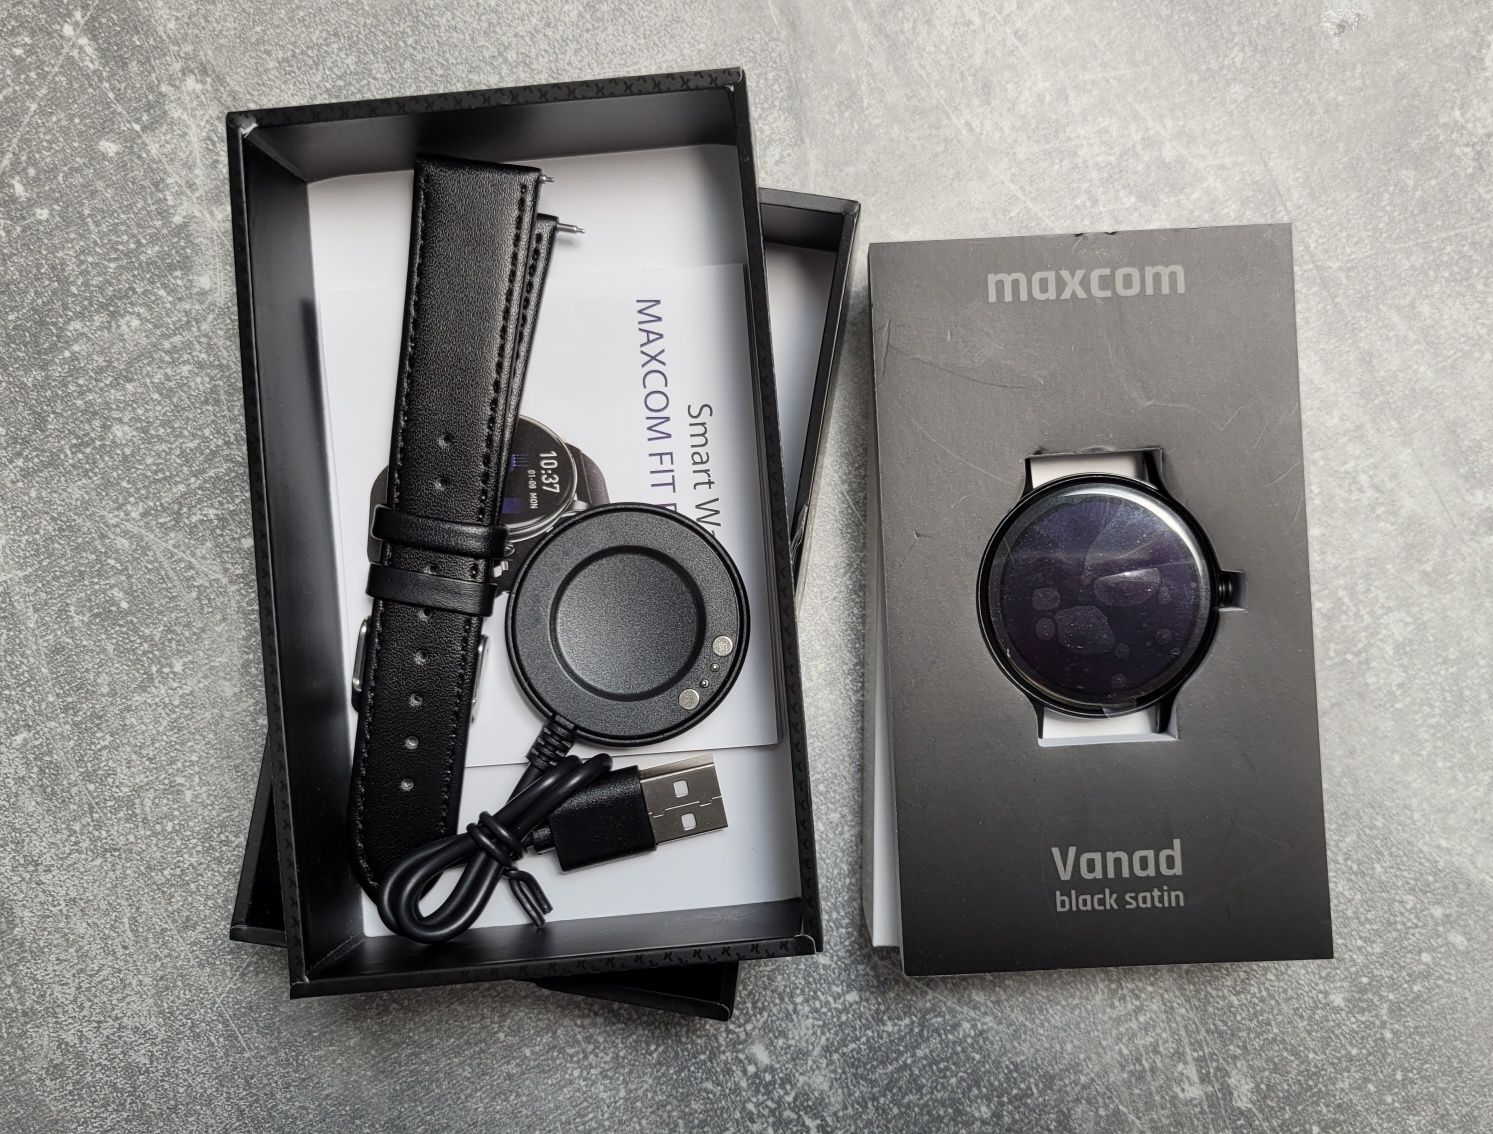 Smartwatch Maxcom Vanad